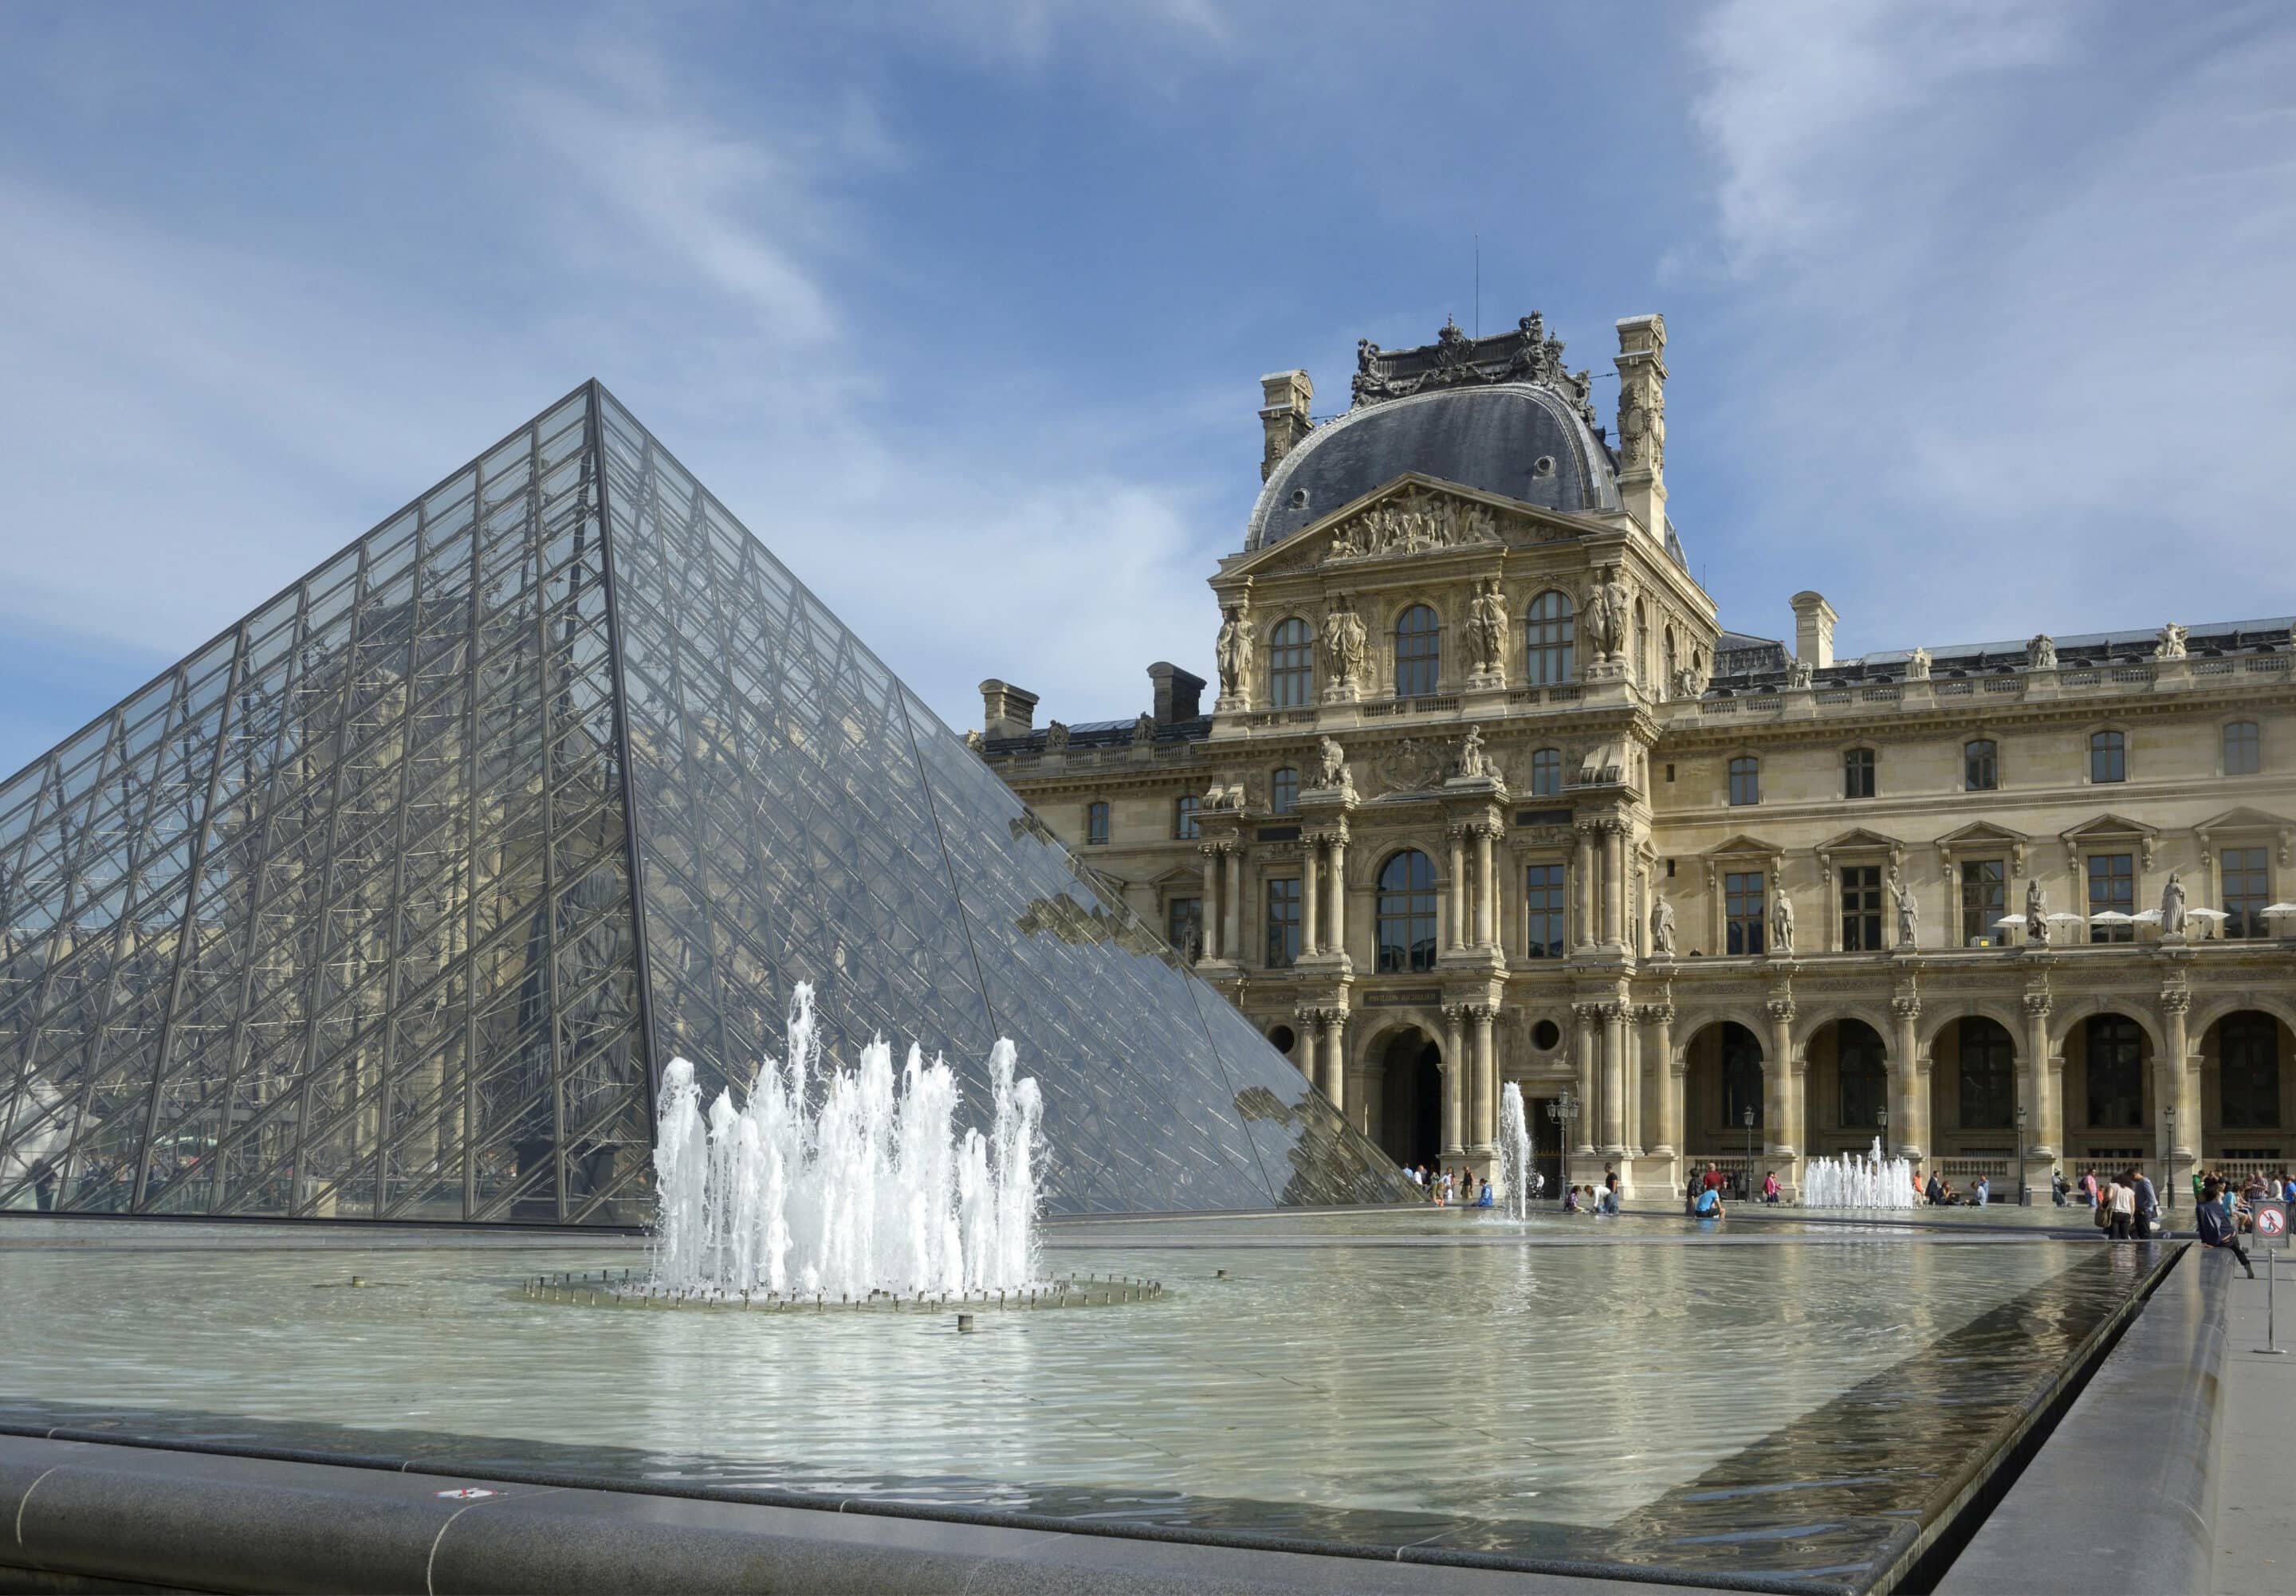 Musee du Louvre, Paris, France, Europe/iblnit03789936/imageBROKER.com/Michael Nitzschke/SIPA/2308162038